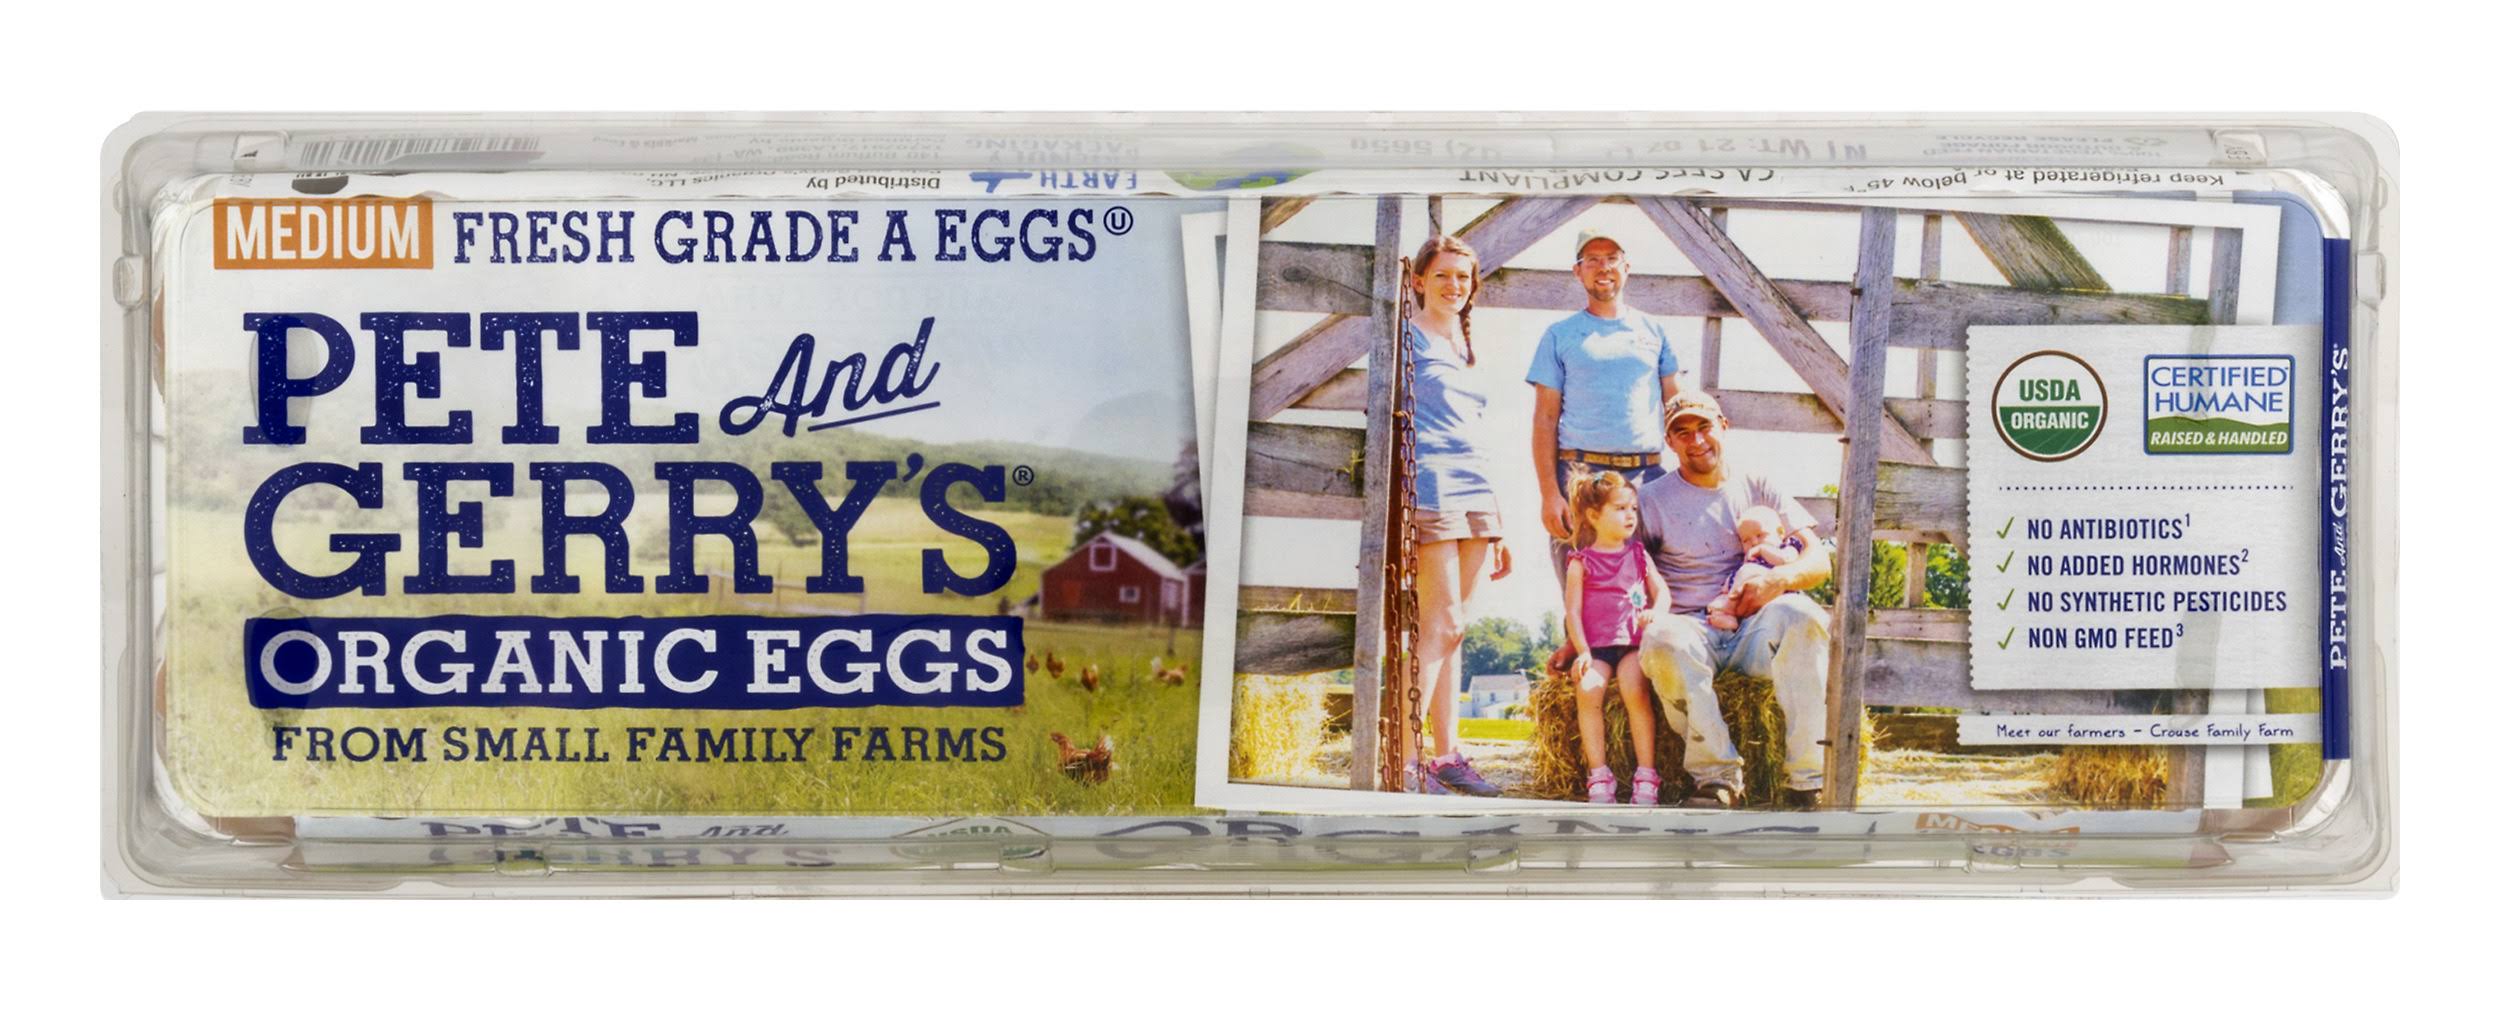 Pete And Gerrys Eggs, Organic, Medium, Grade A - 12 eggs, 21 oz